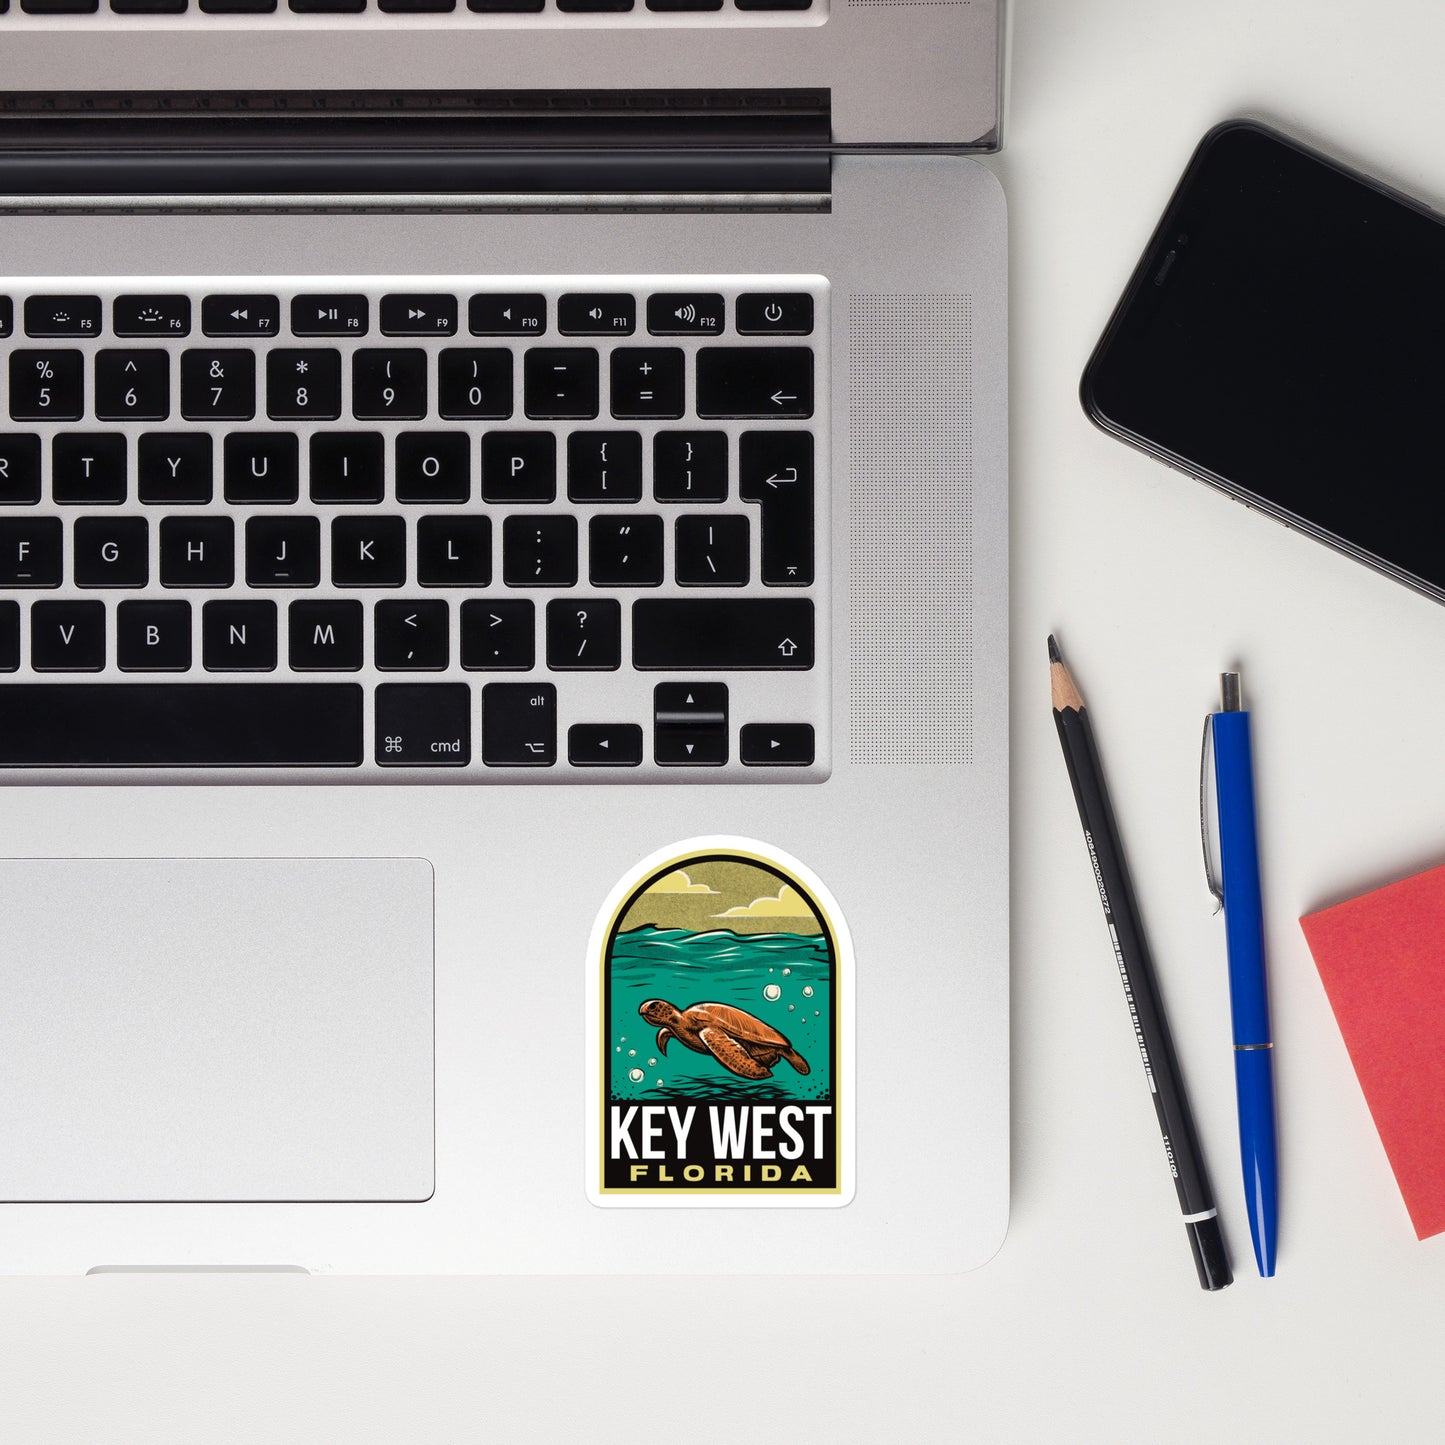 A sticker of Key West Florida on a laptop